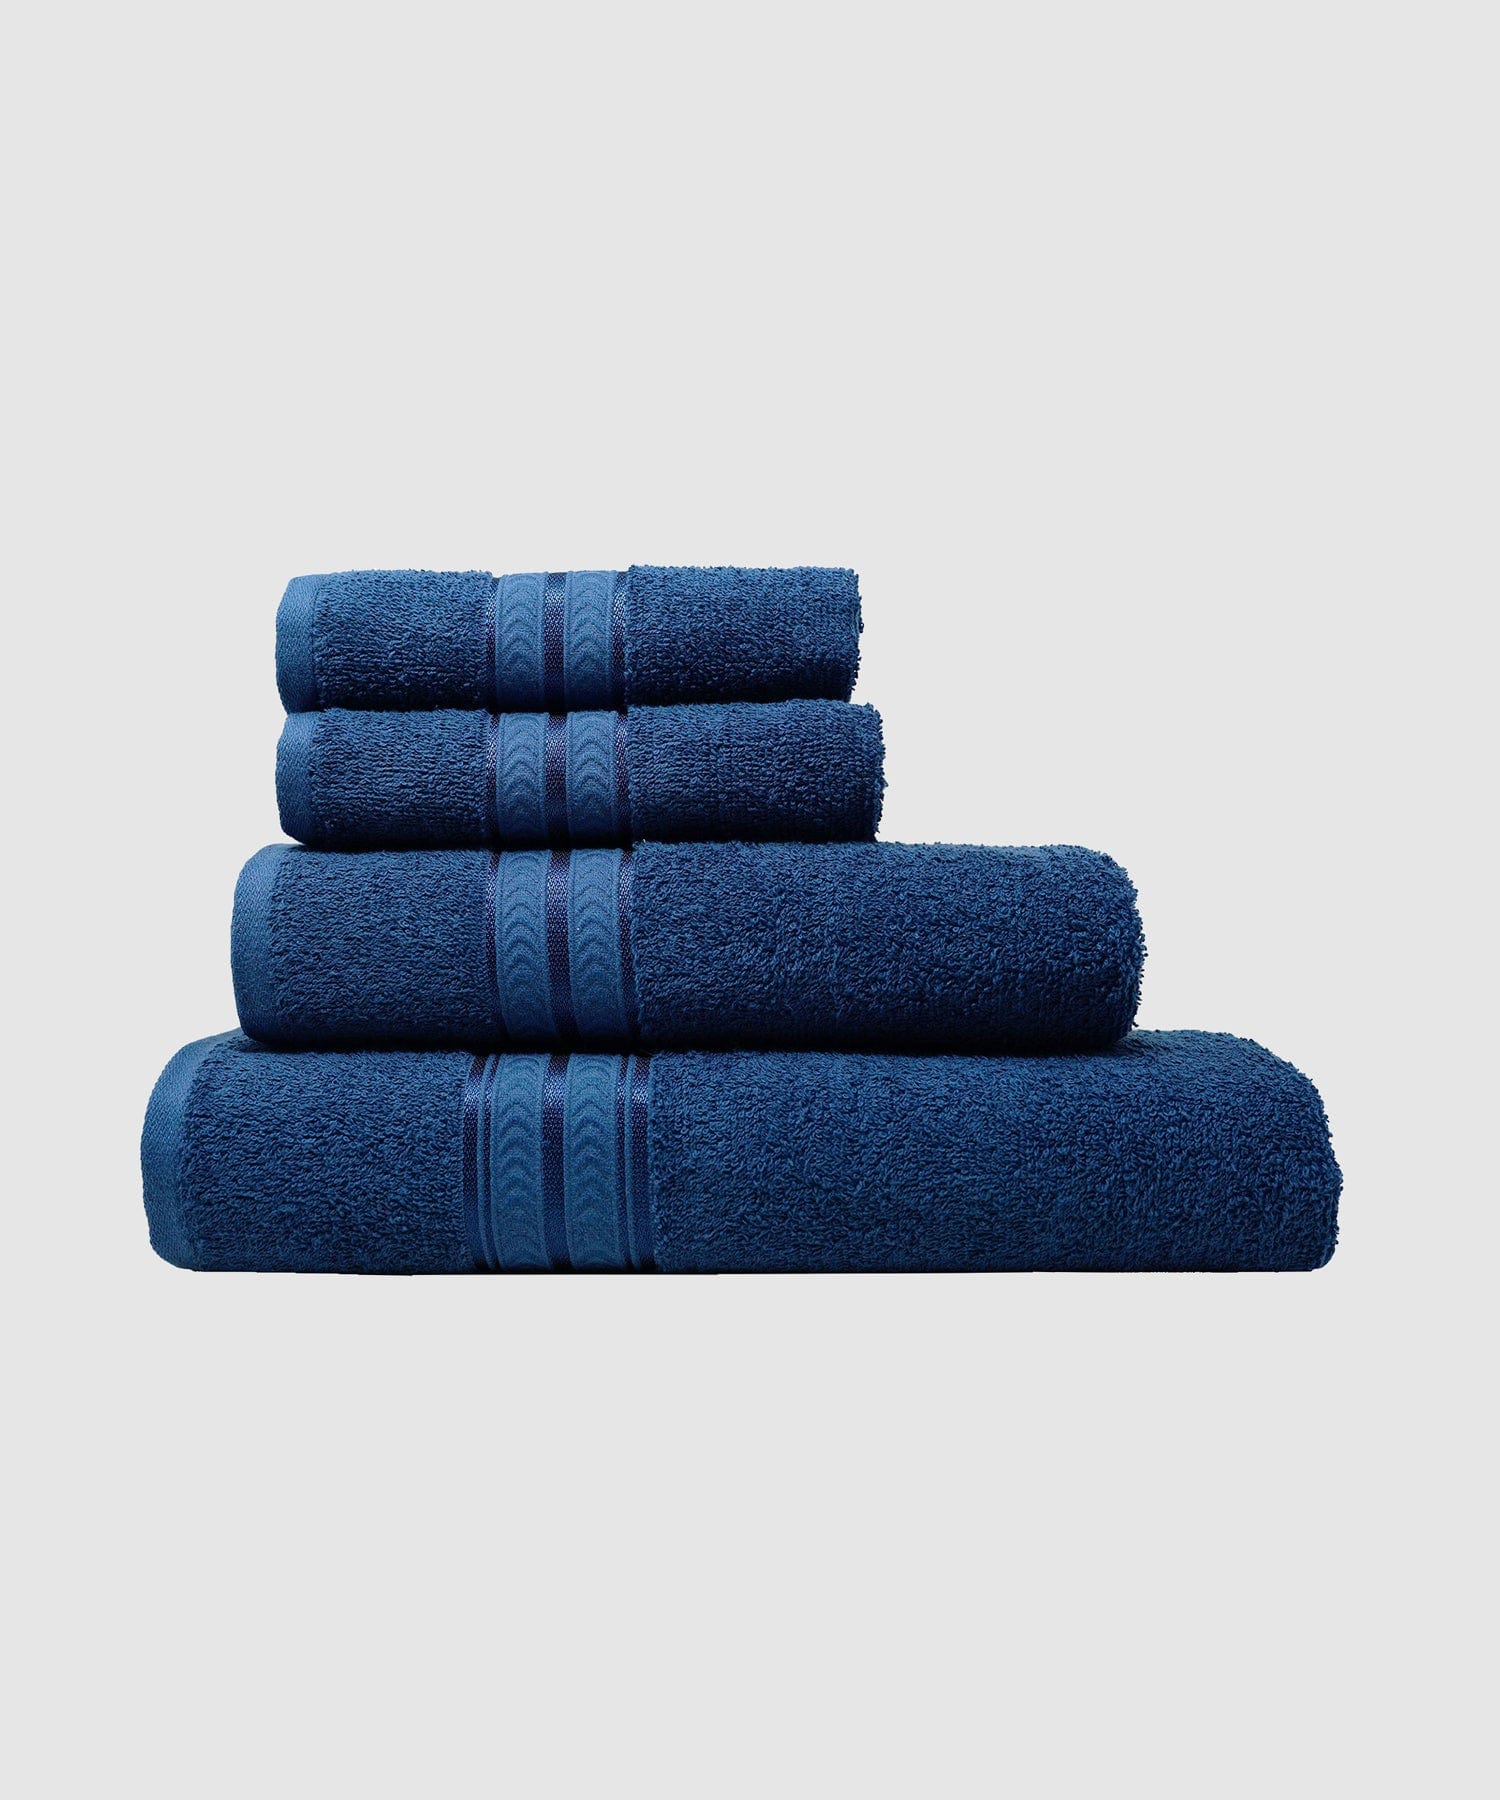 Celebration 4 PC Set 1 Bath Towel of 75 cm x 150 cm, 1 Small Bath Towel of 57 cm x 120 cm, 2 Hand Towels of 40 cm x 60 cm  MIDNIGHT BLUE